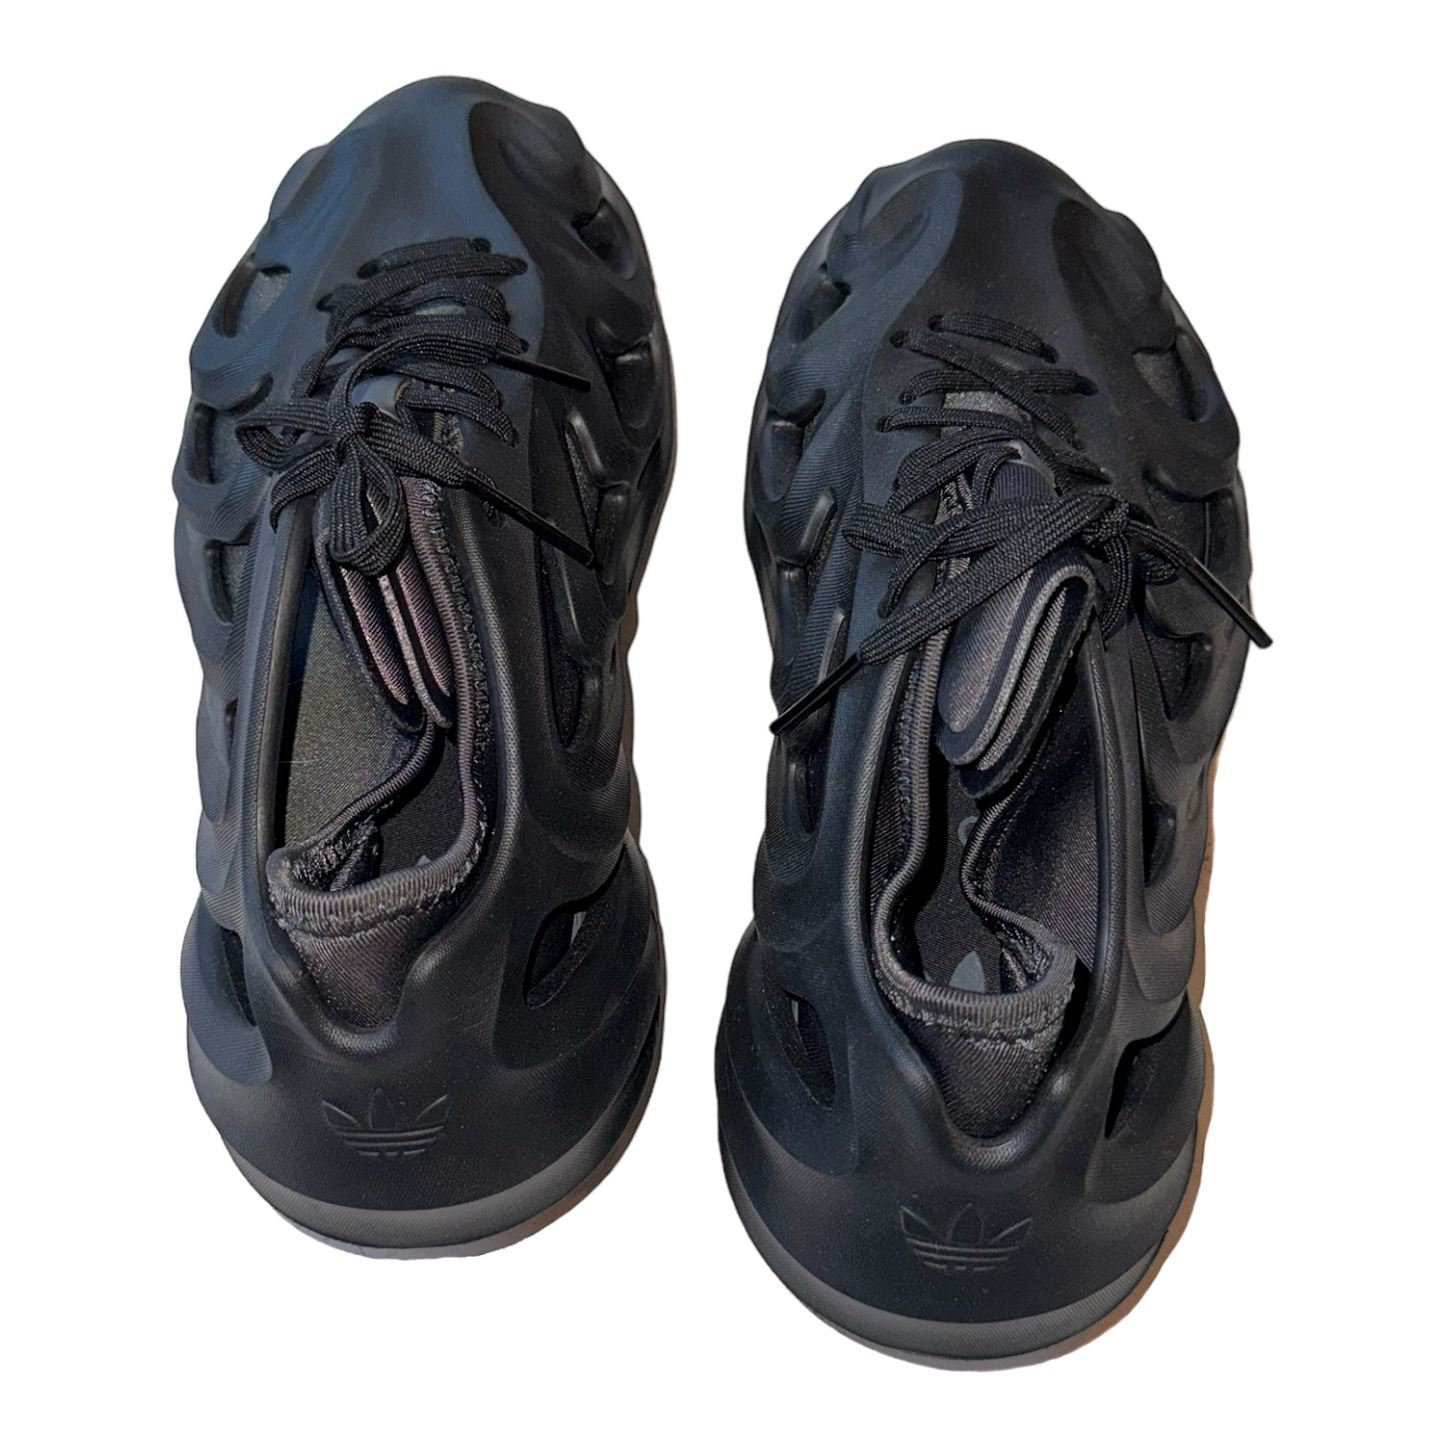 Addias - Adifoam Q Black Runners 5.5M Sneakers